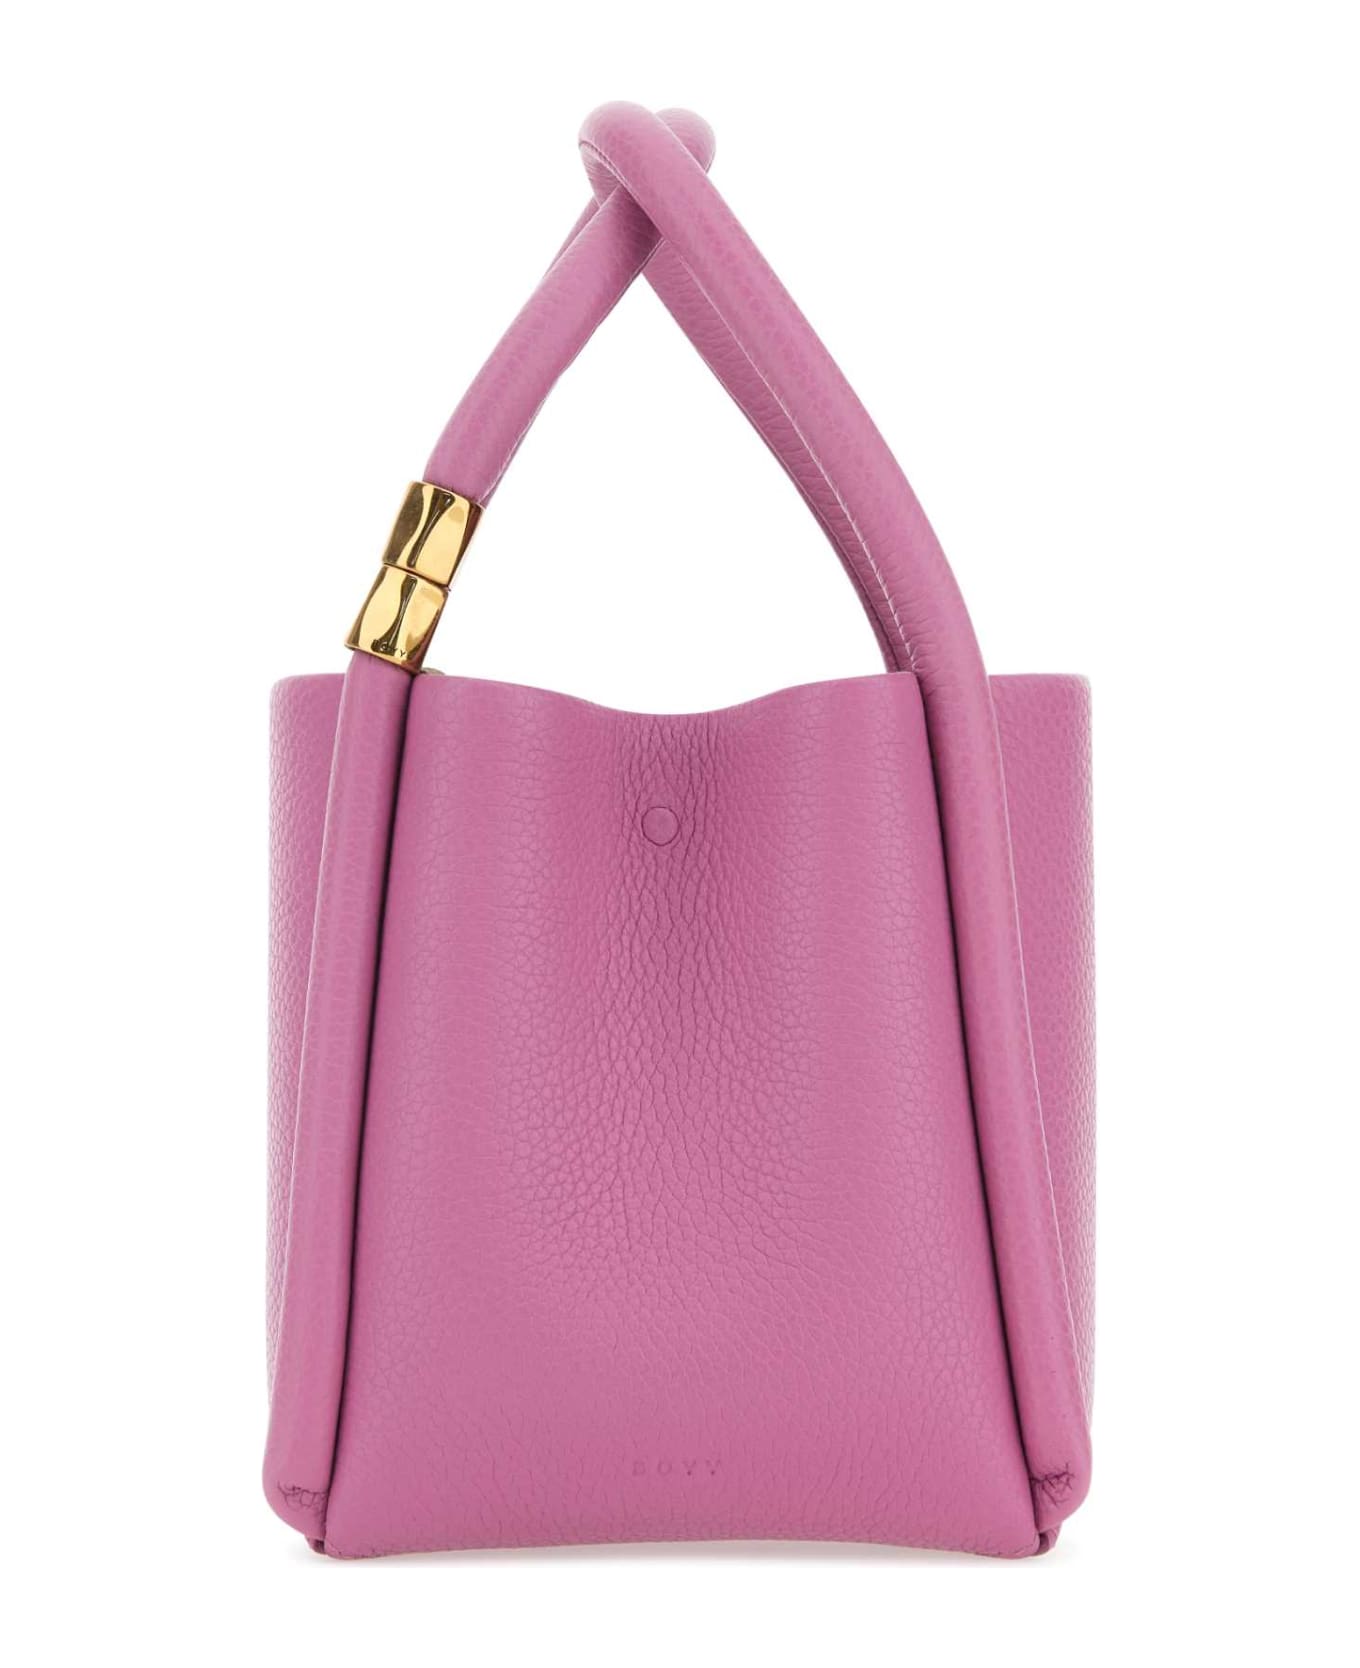 BOYY Dark Pink Leather Lotus 12 Handbag - PUTTY トートバッグ